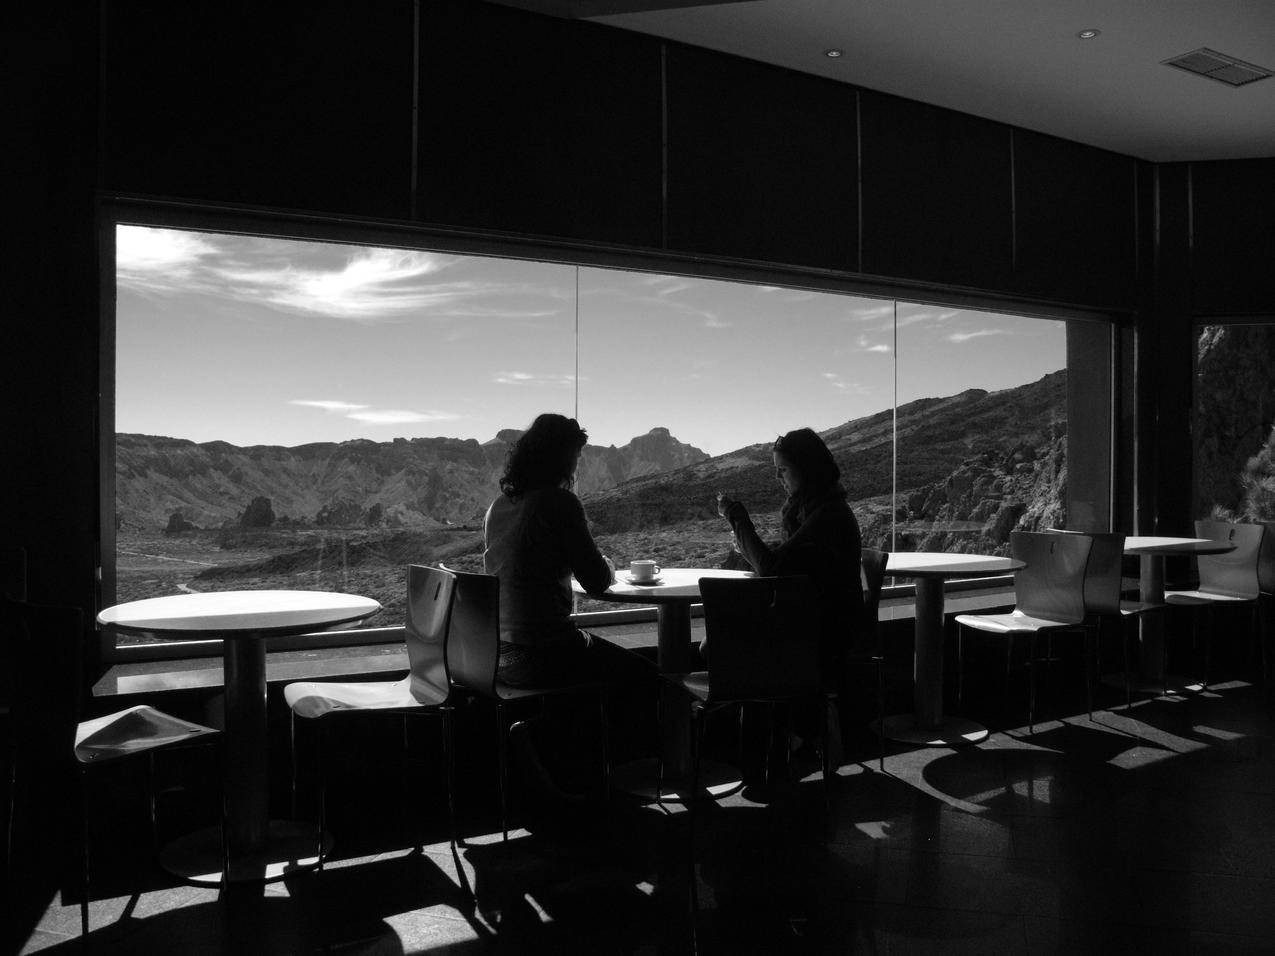 cc0可商用的黑白照片,餐厅,山,人